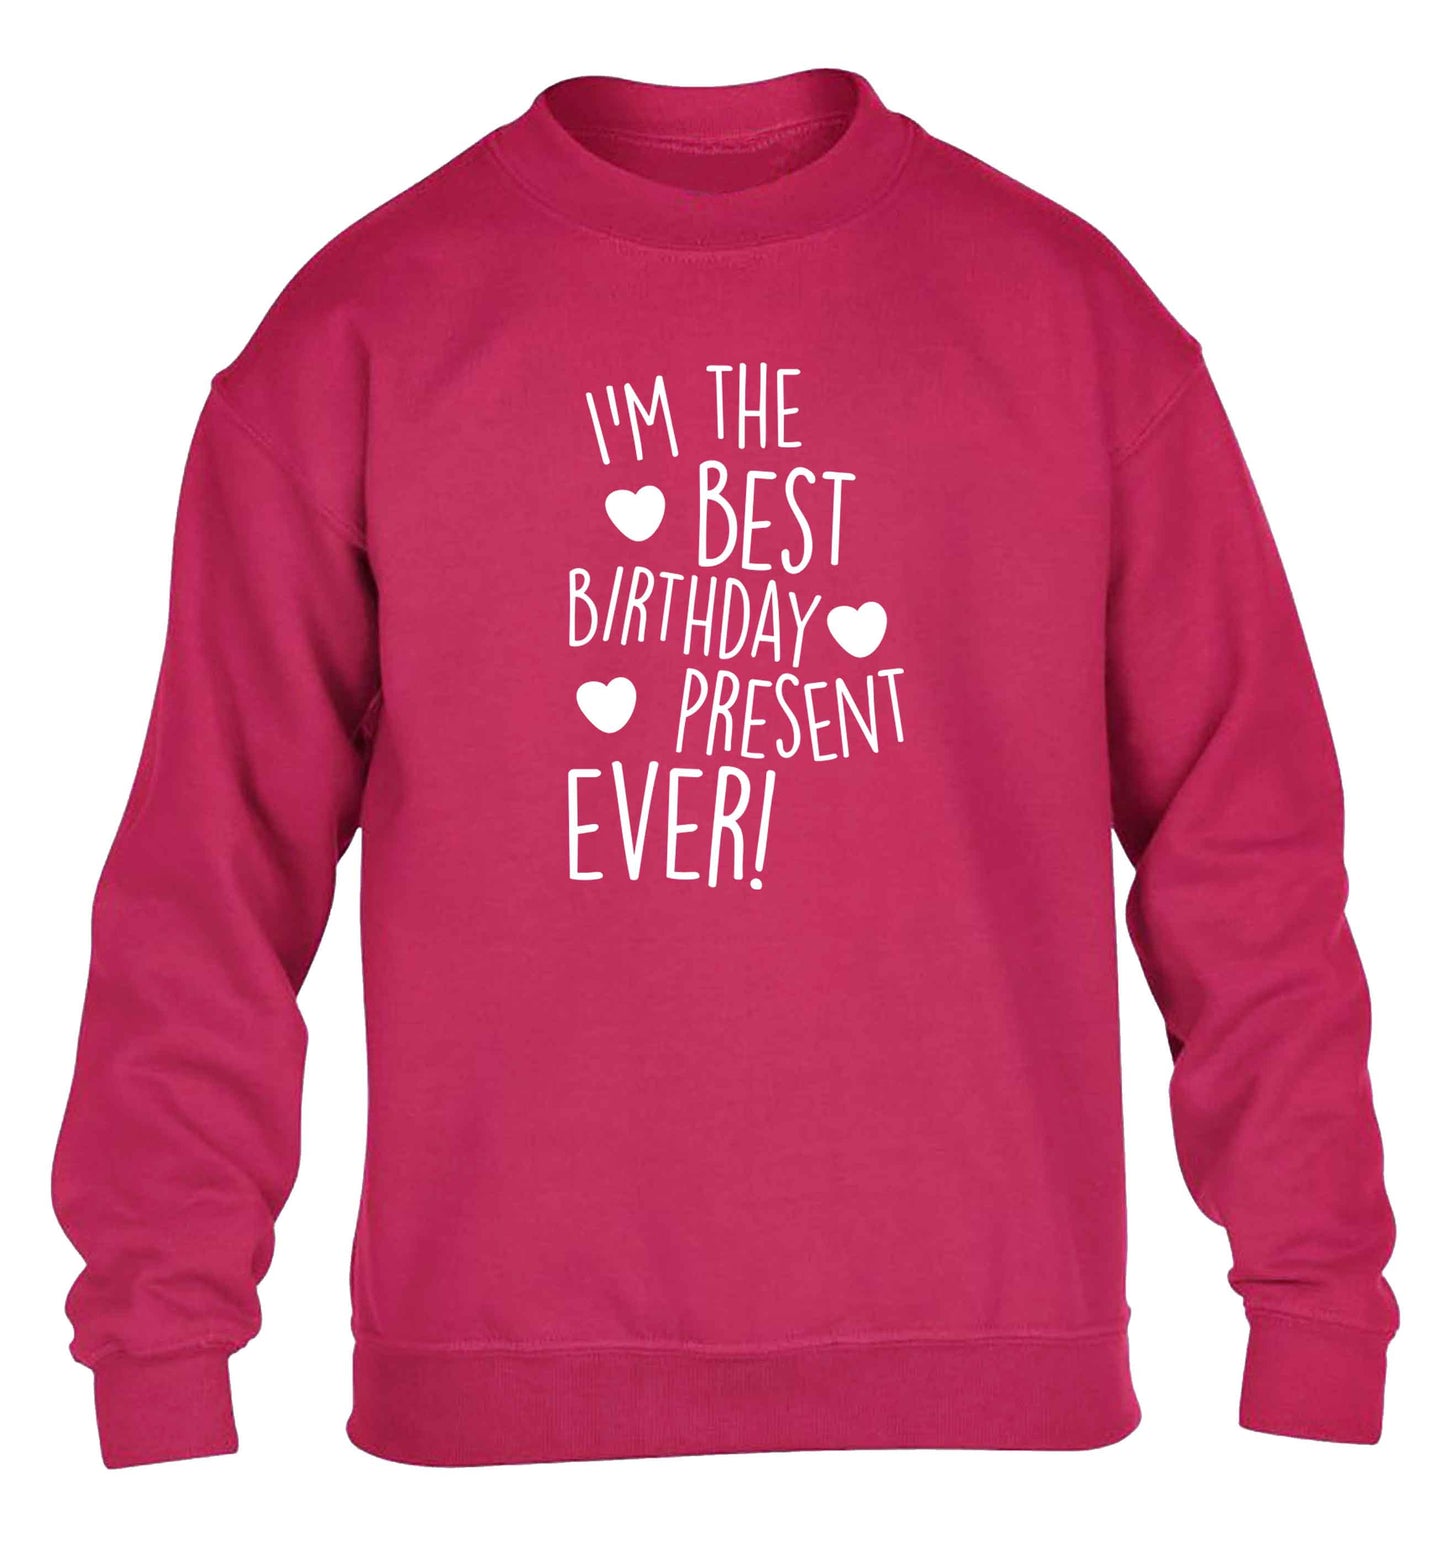 I'm the best birthday present ever children's pink sweater 12-13 Years